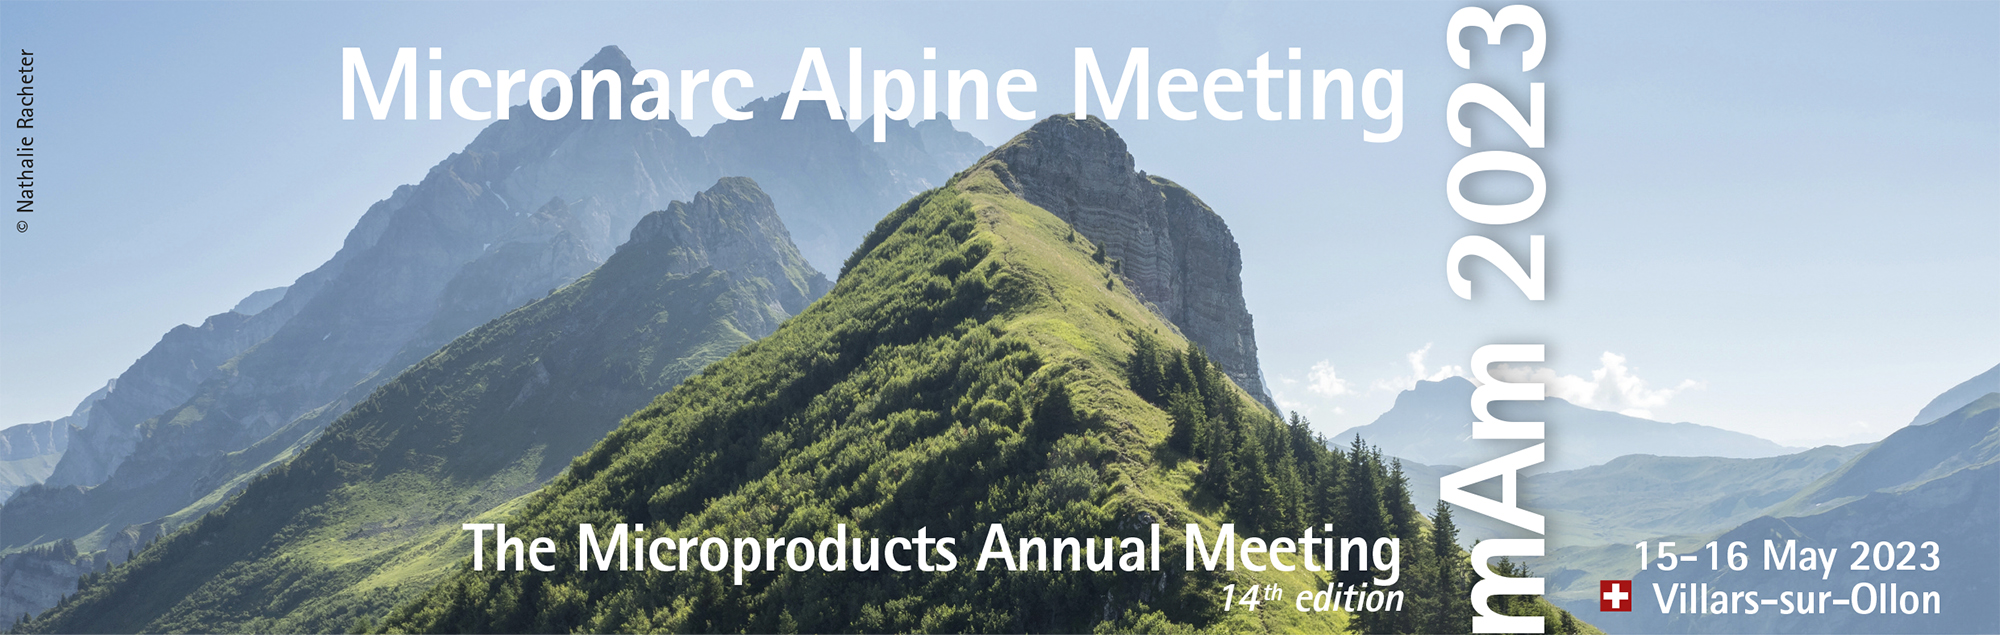 mAm 2023 – Micronarc Alpine Meeting